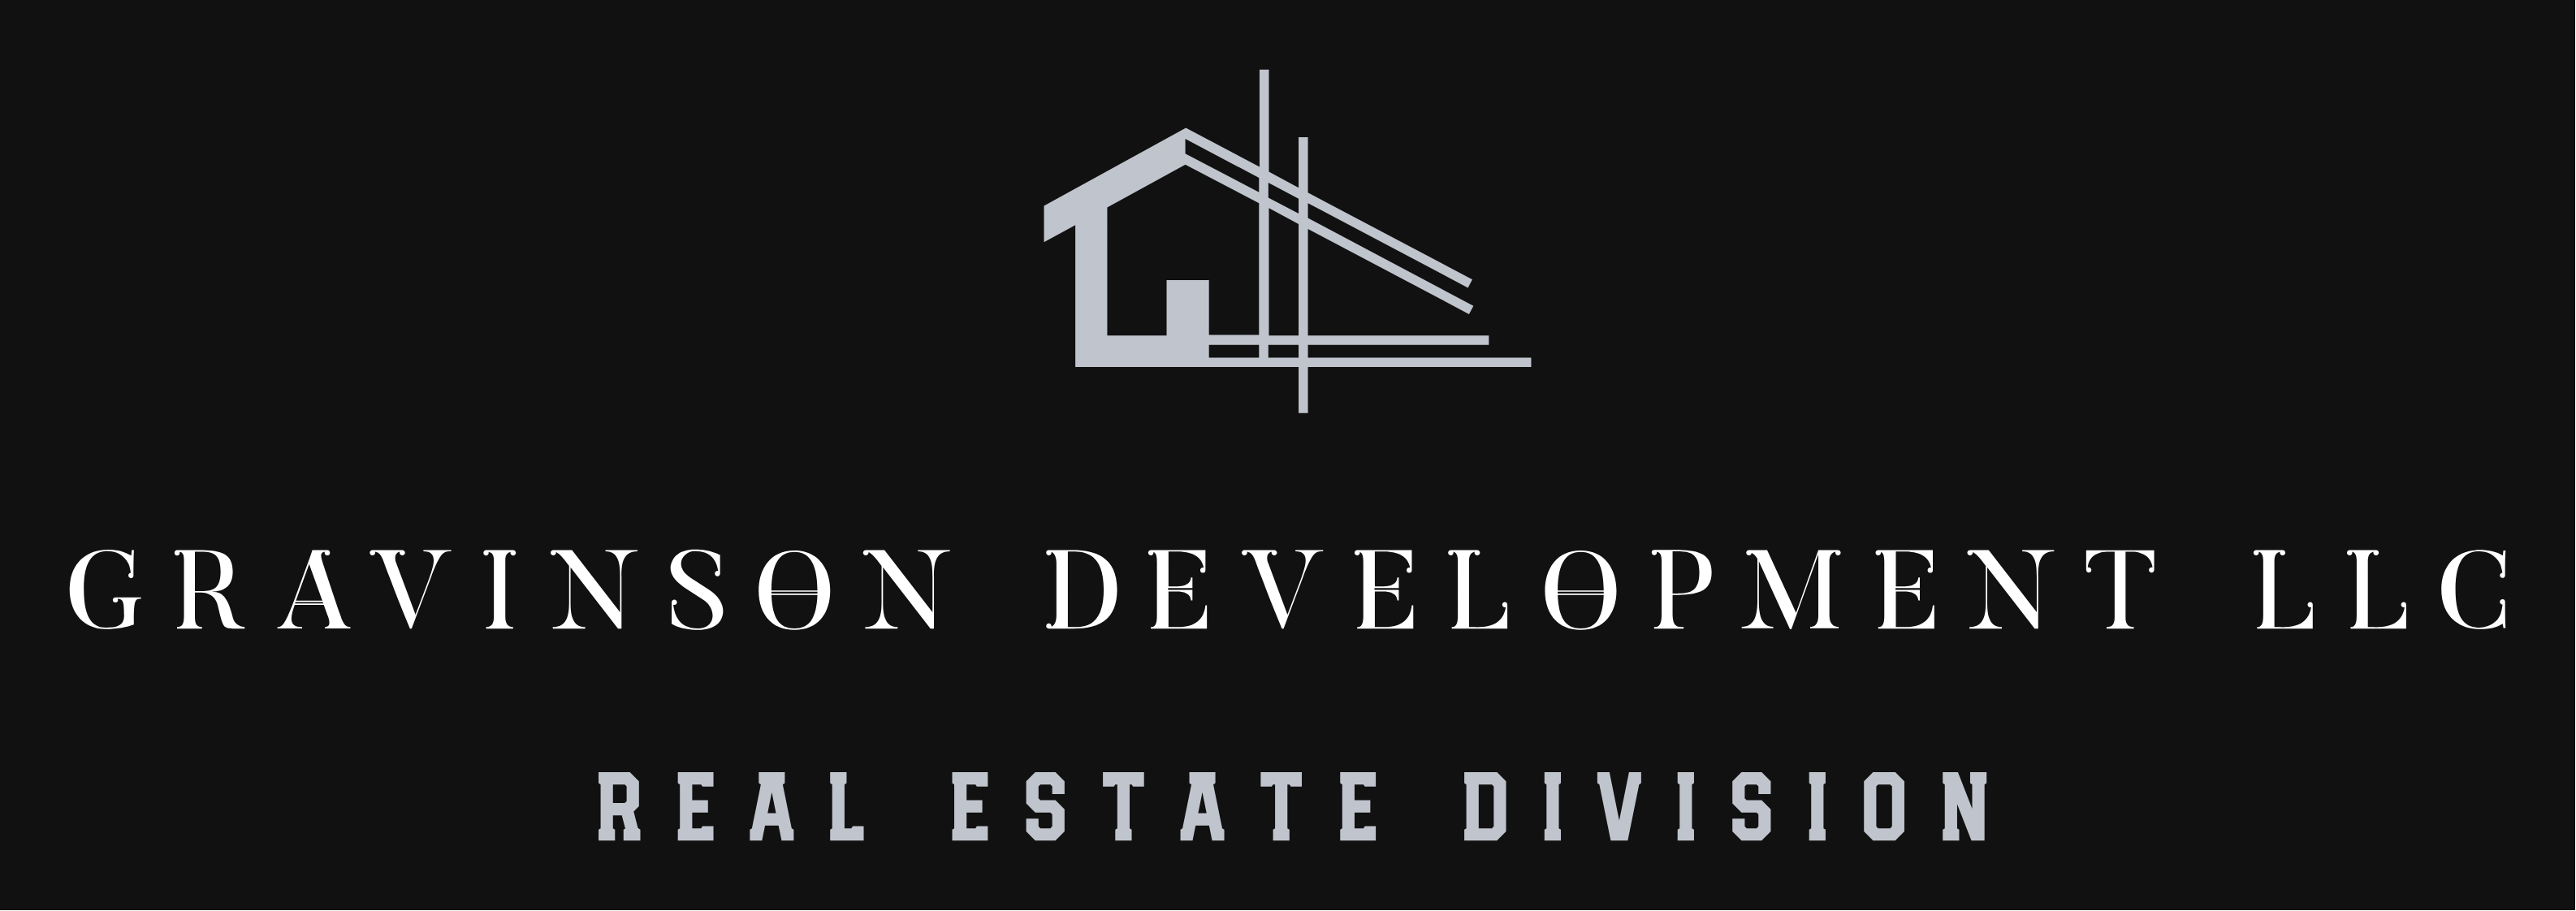 Gravinson Development Real Estate